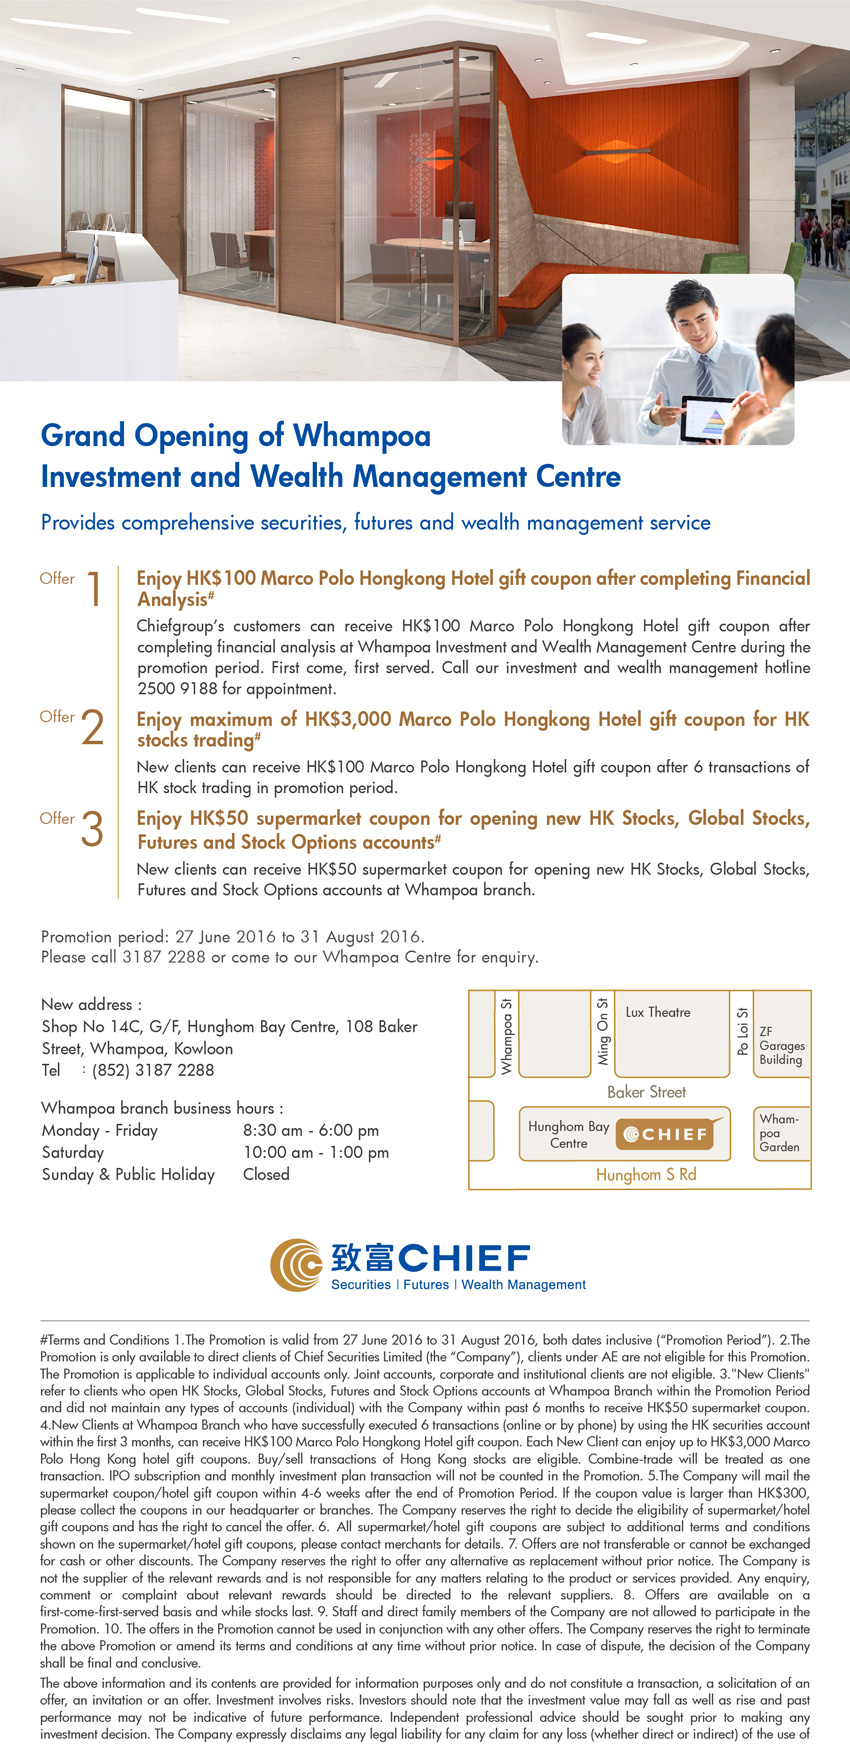 Whampoa Branch Upgrade to Investment and Wealth Management Centre